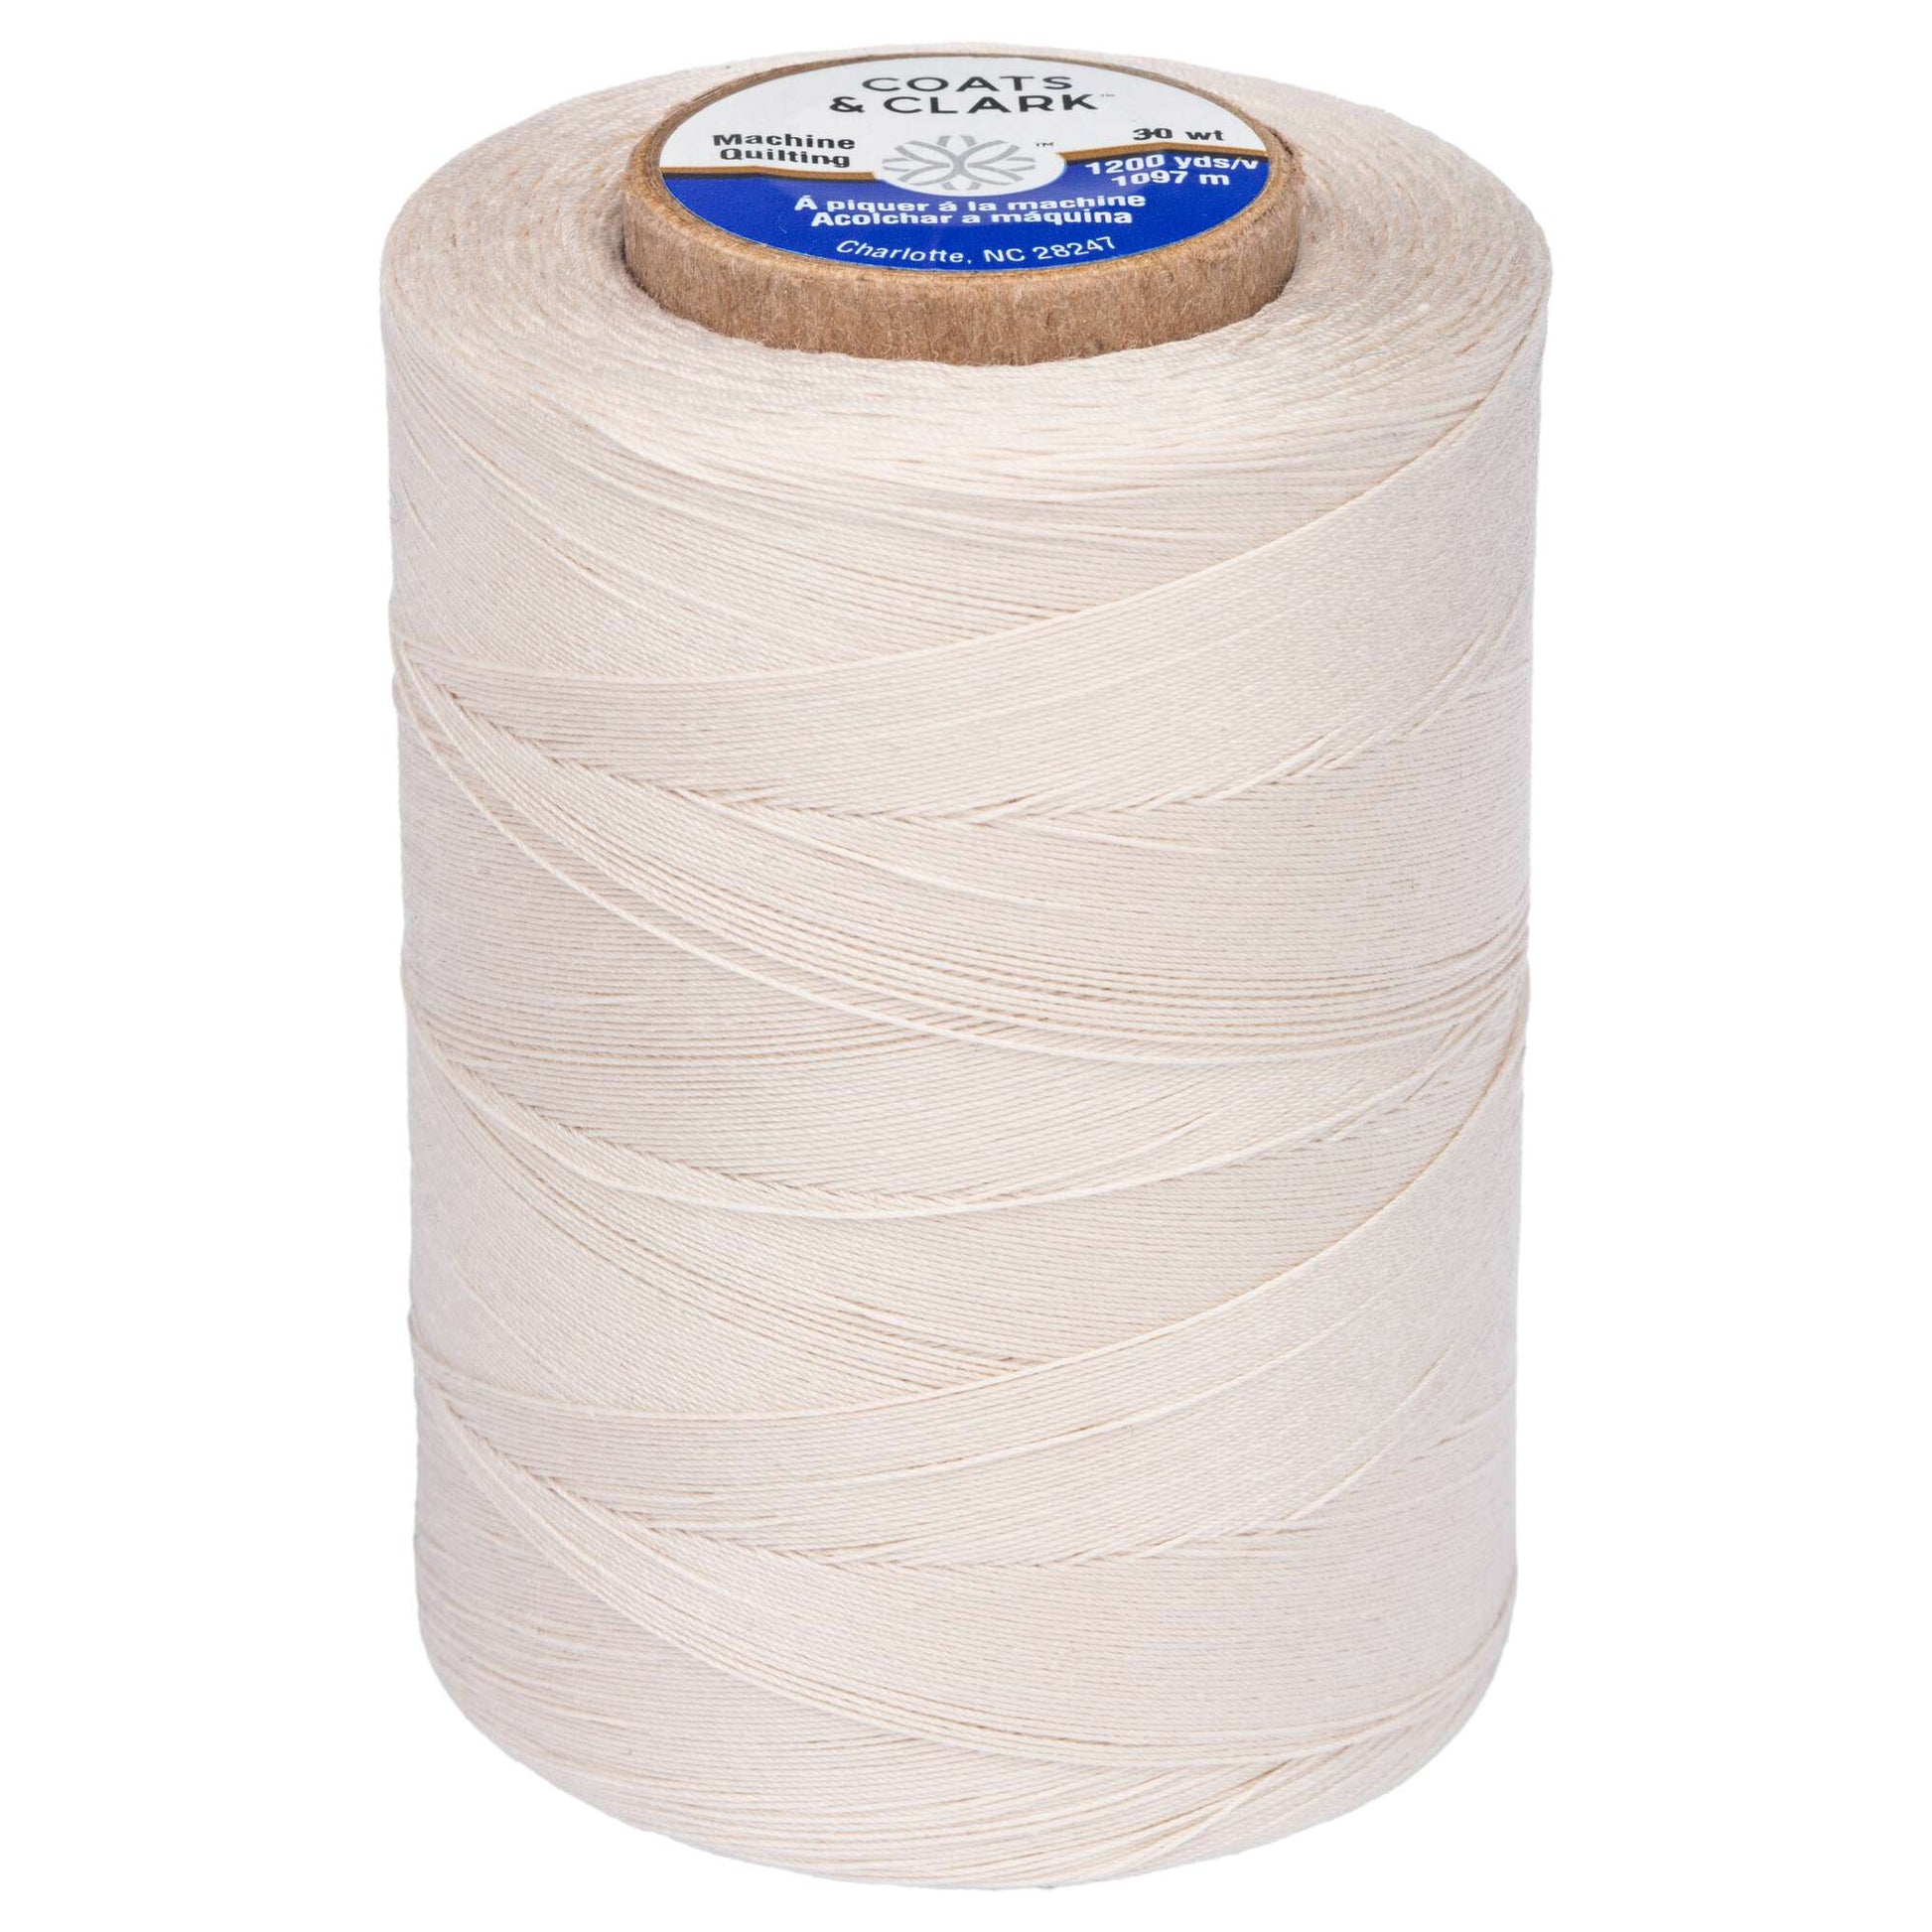 Coats & Clark Cotton Machine Quilting Thread (1200 Yards) Natural